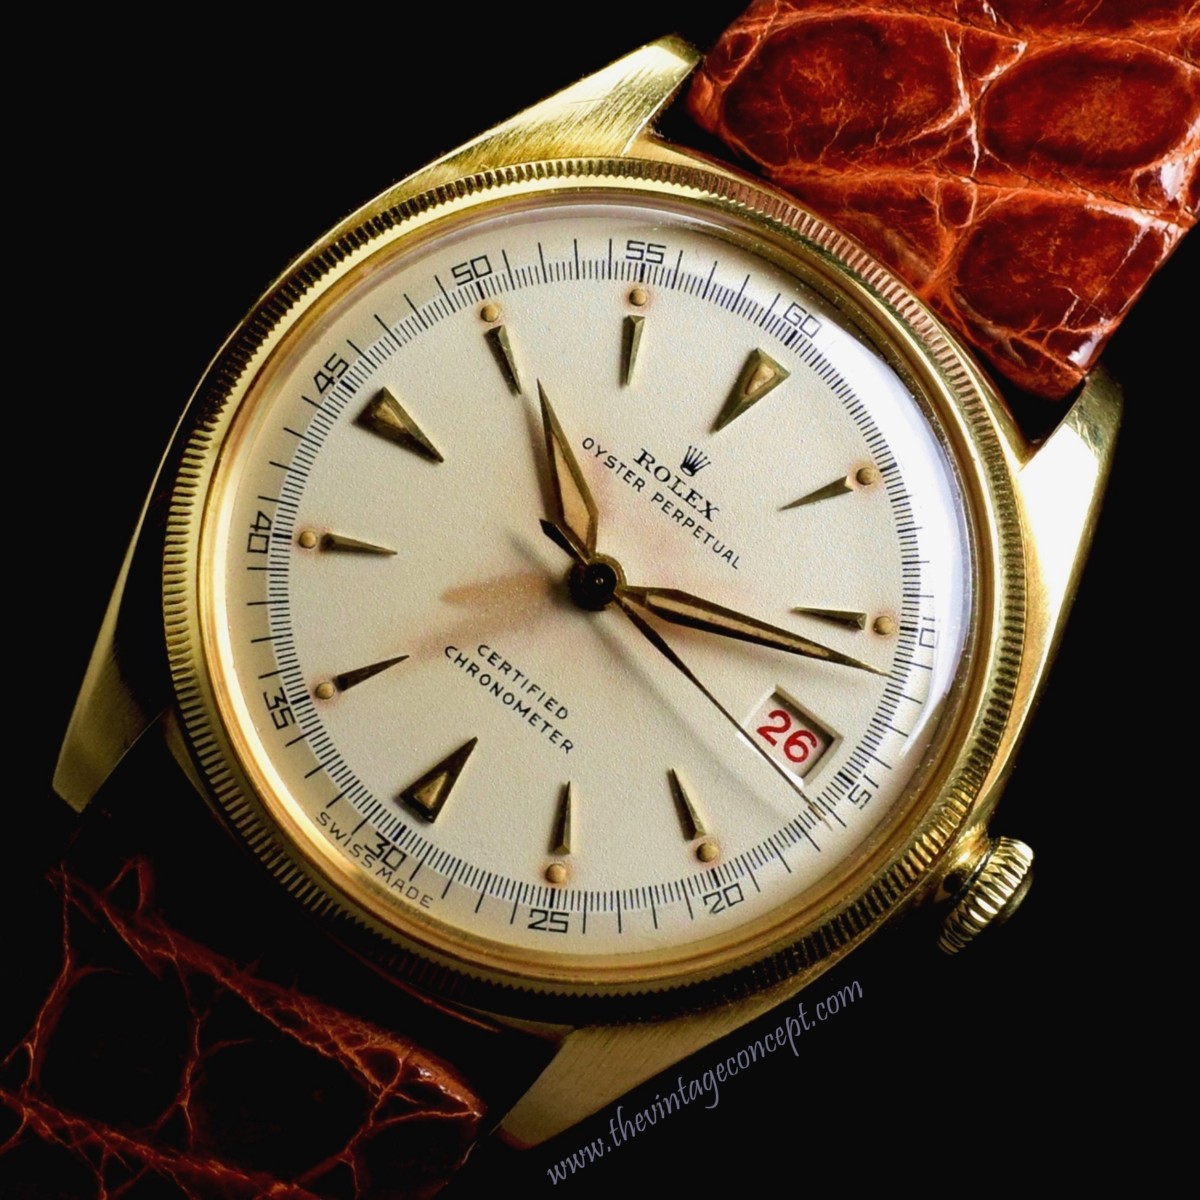 Rolex Datejust YG Big Bubbleback 4467 - The Vintage Concept